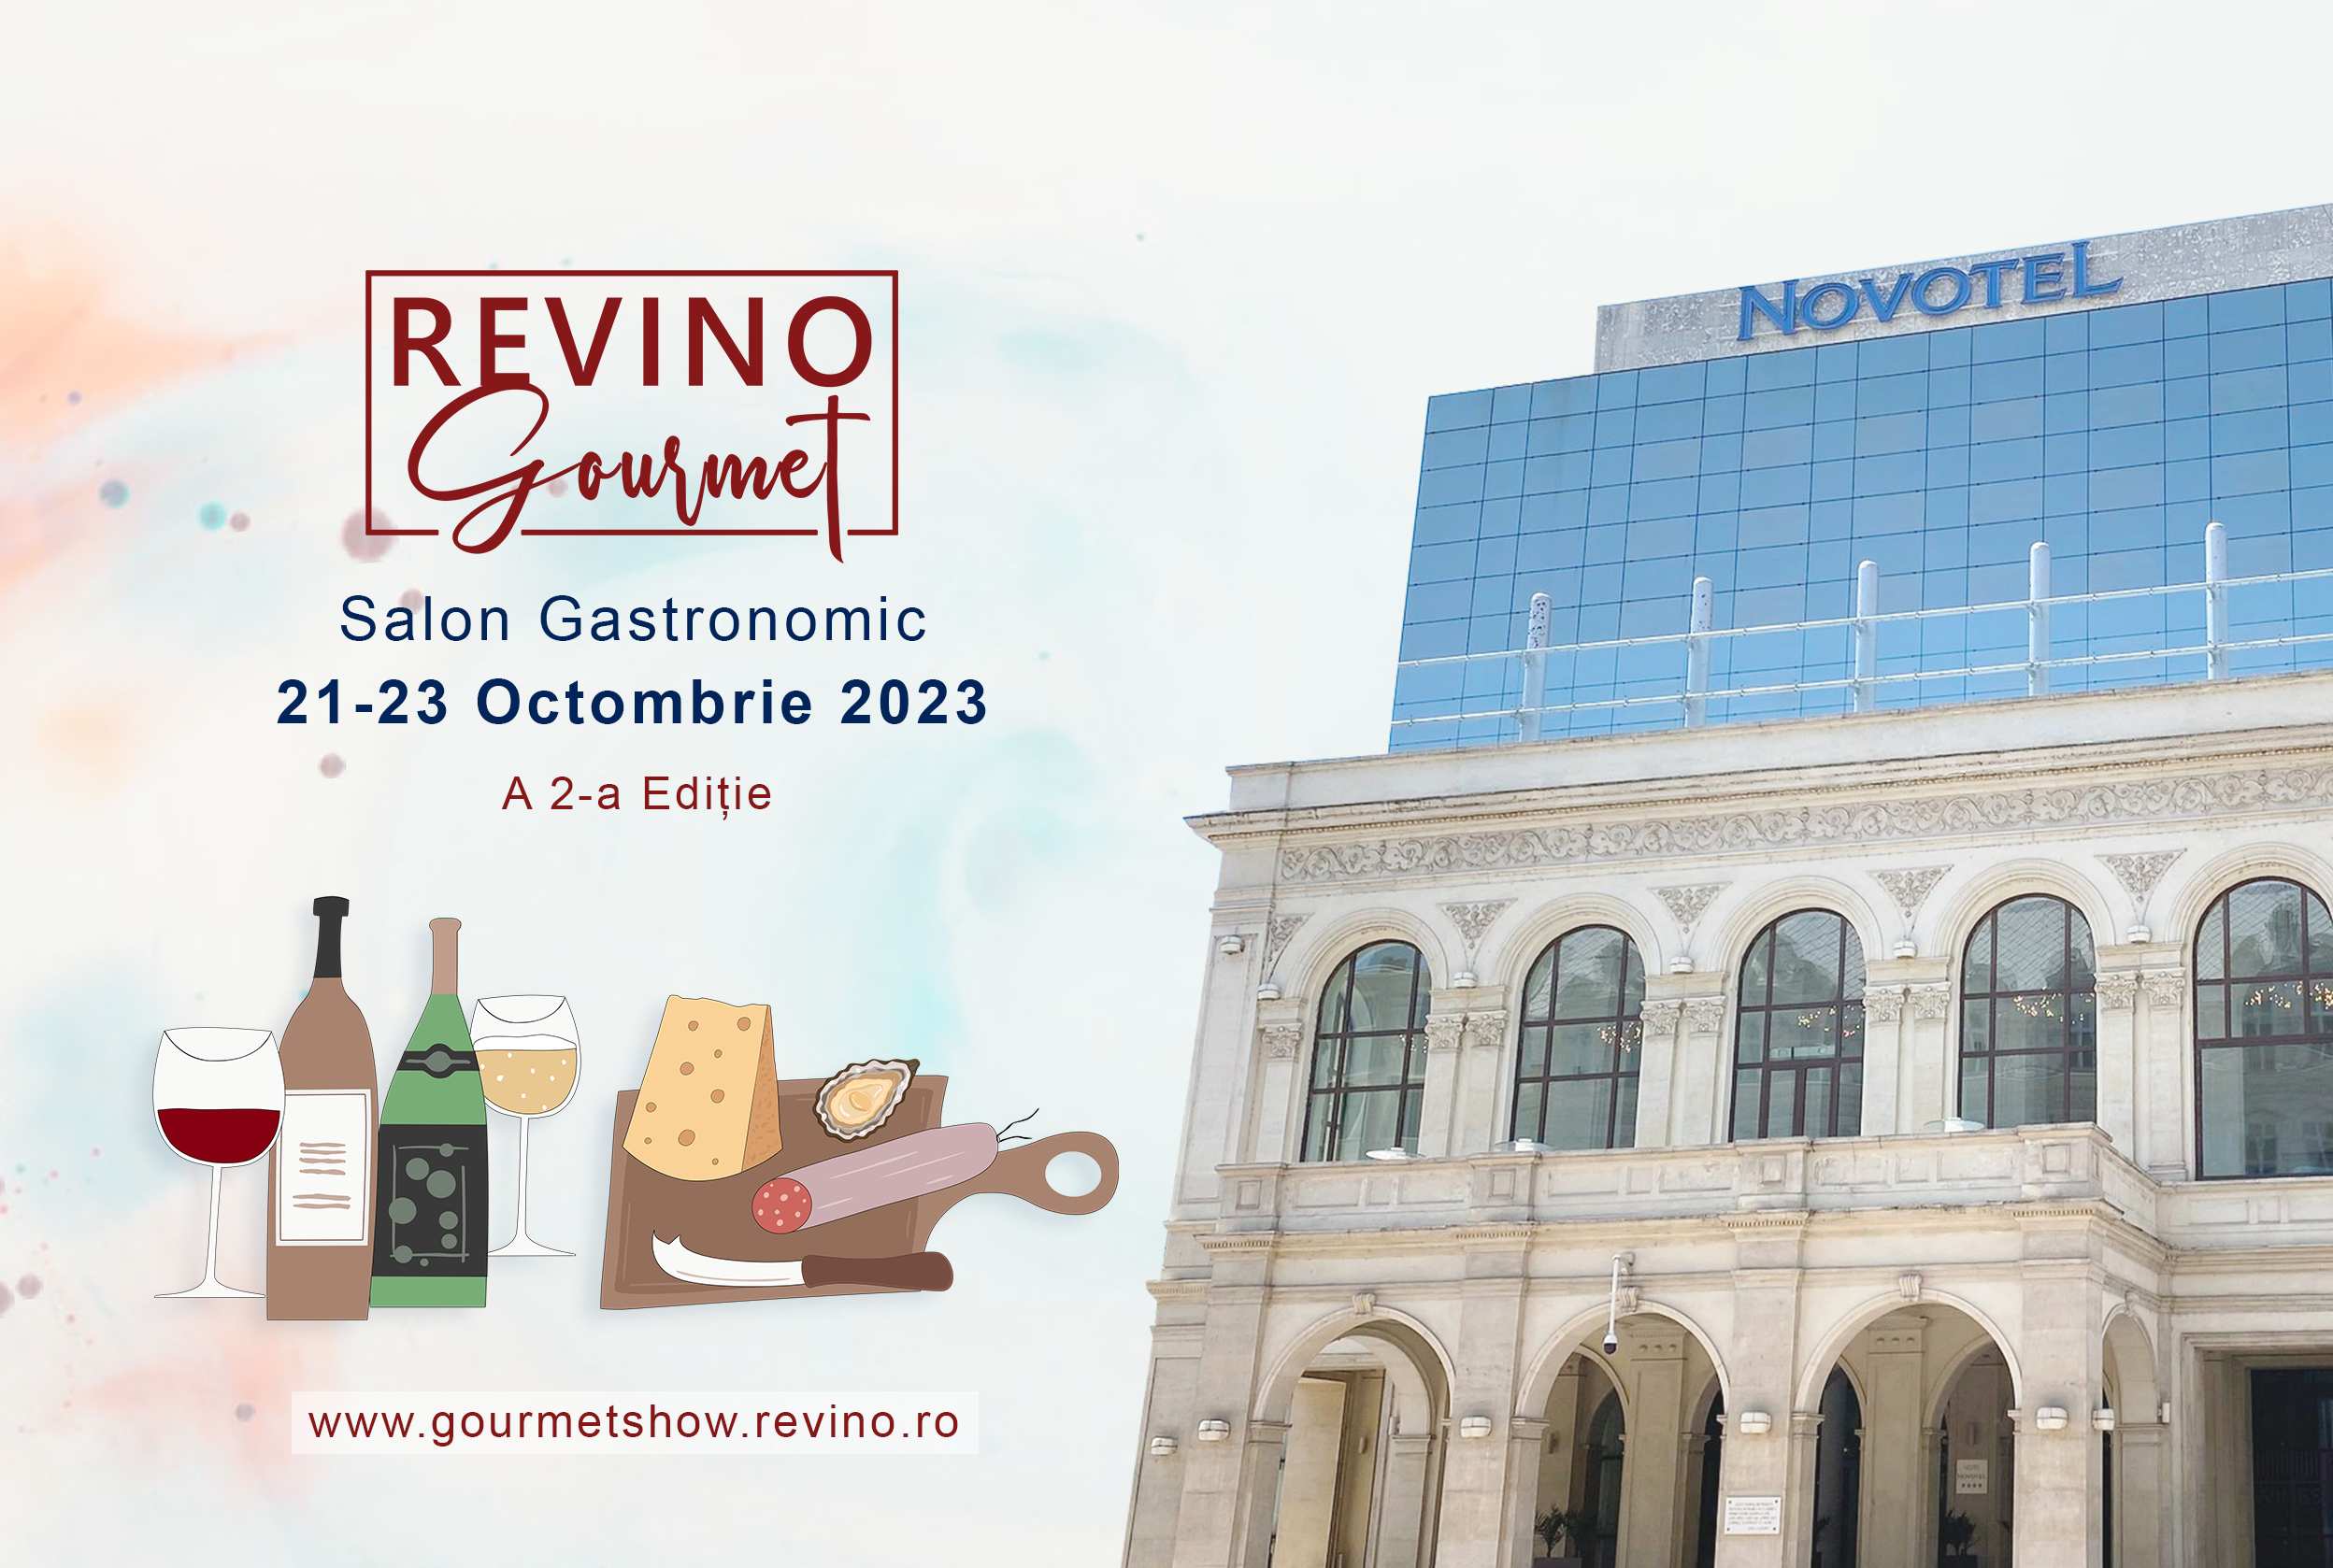  Revino Gourmet Salon Gastronomic 2023 3 1